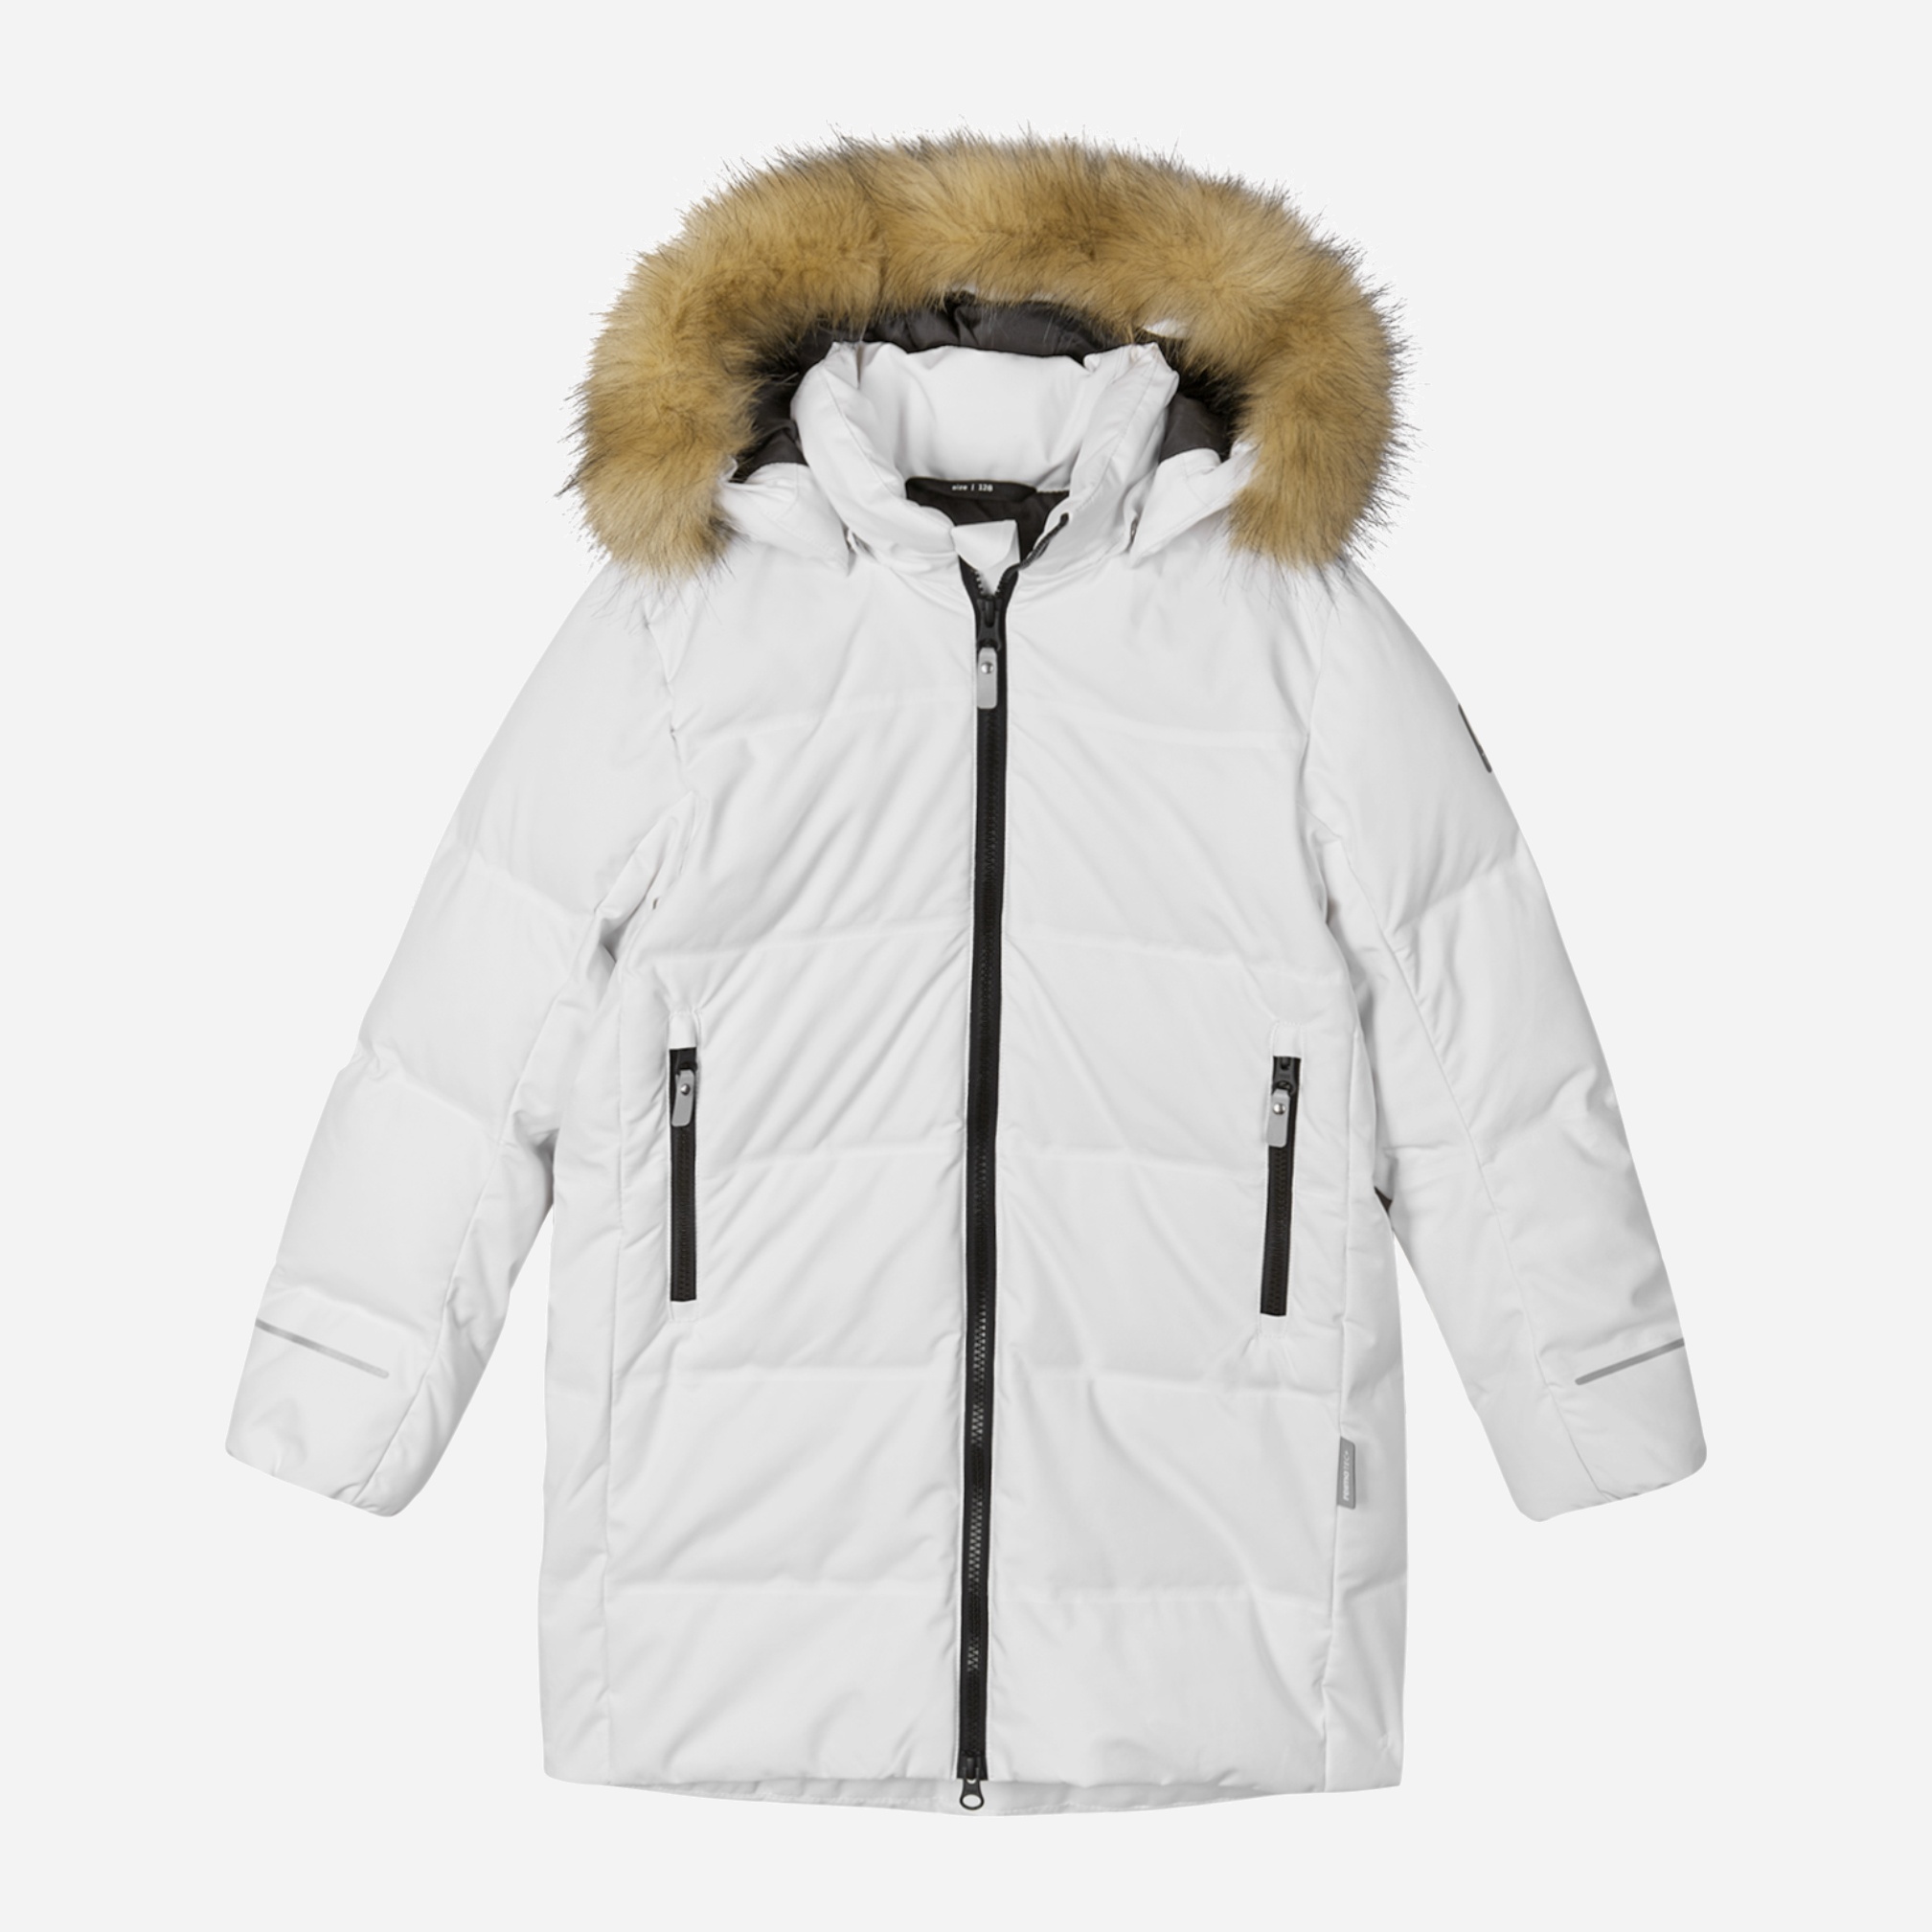 Акция на Дитяча зимова термо куртка для хлопчика Reima Wisdom 531425F-0100 134 см от Rozetka